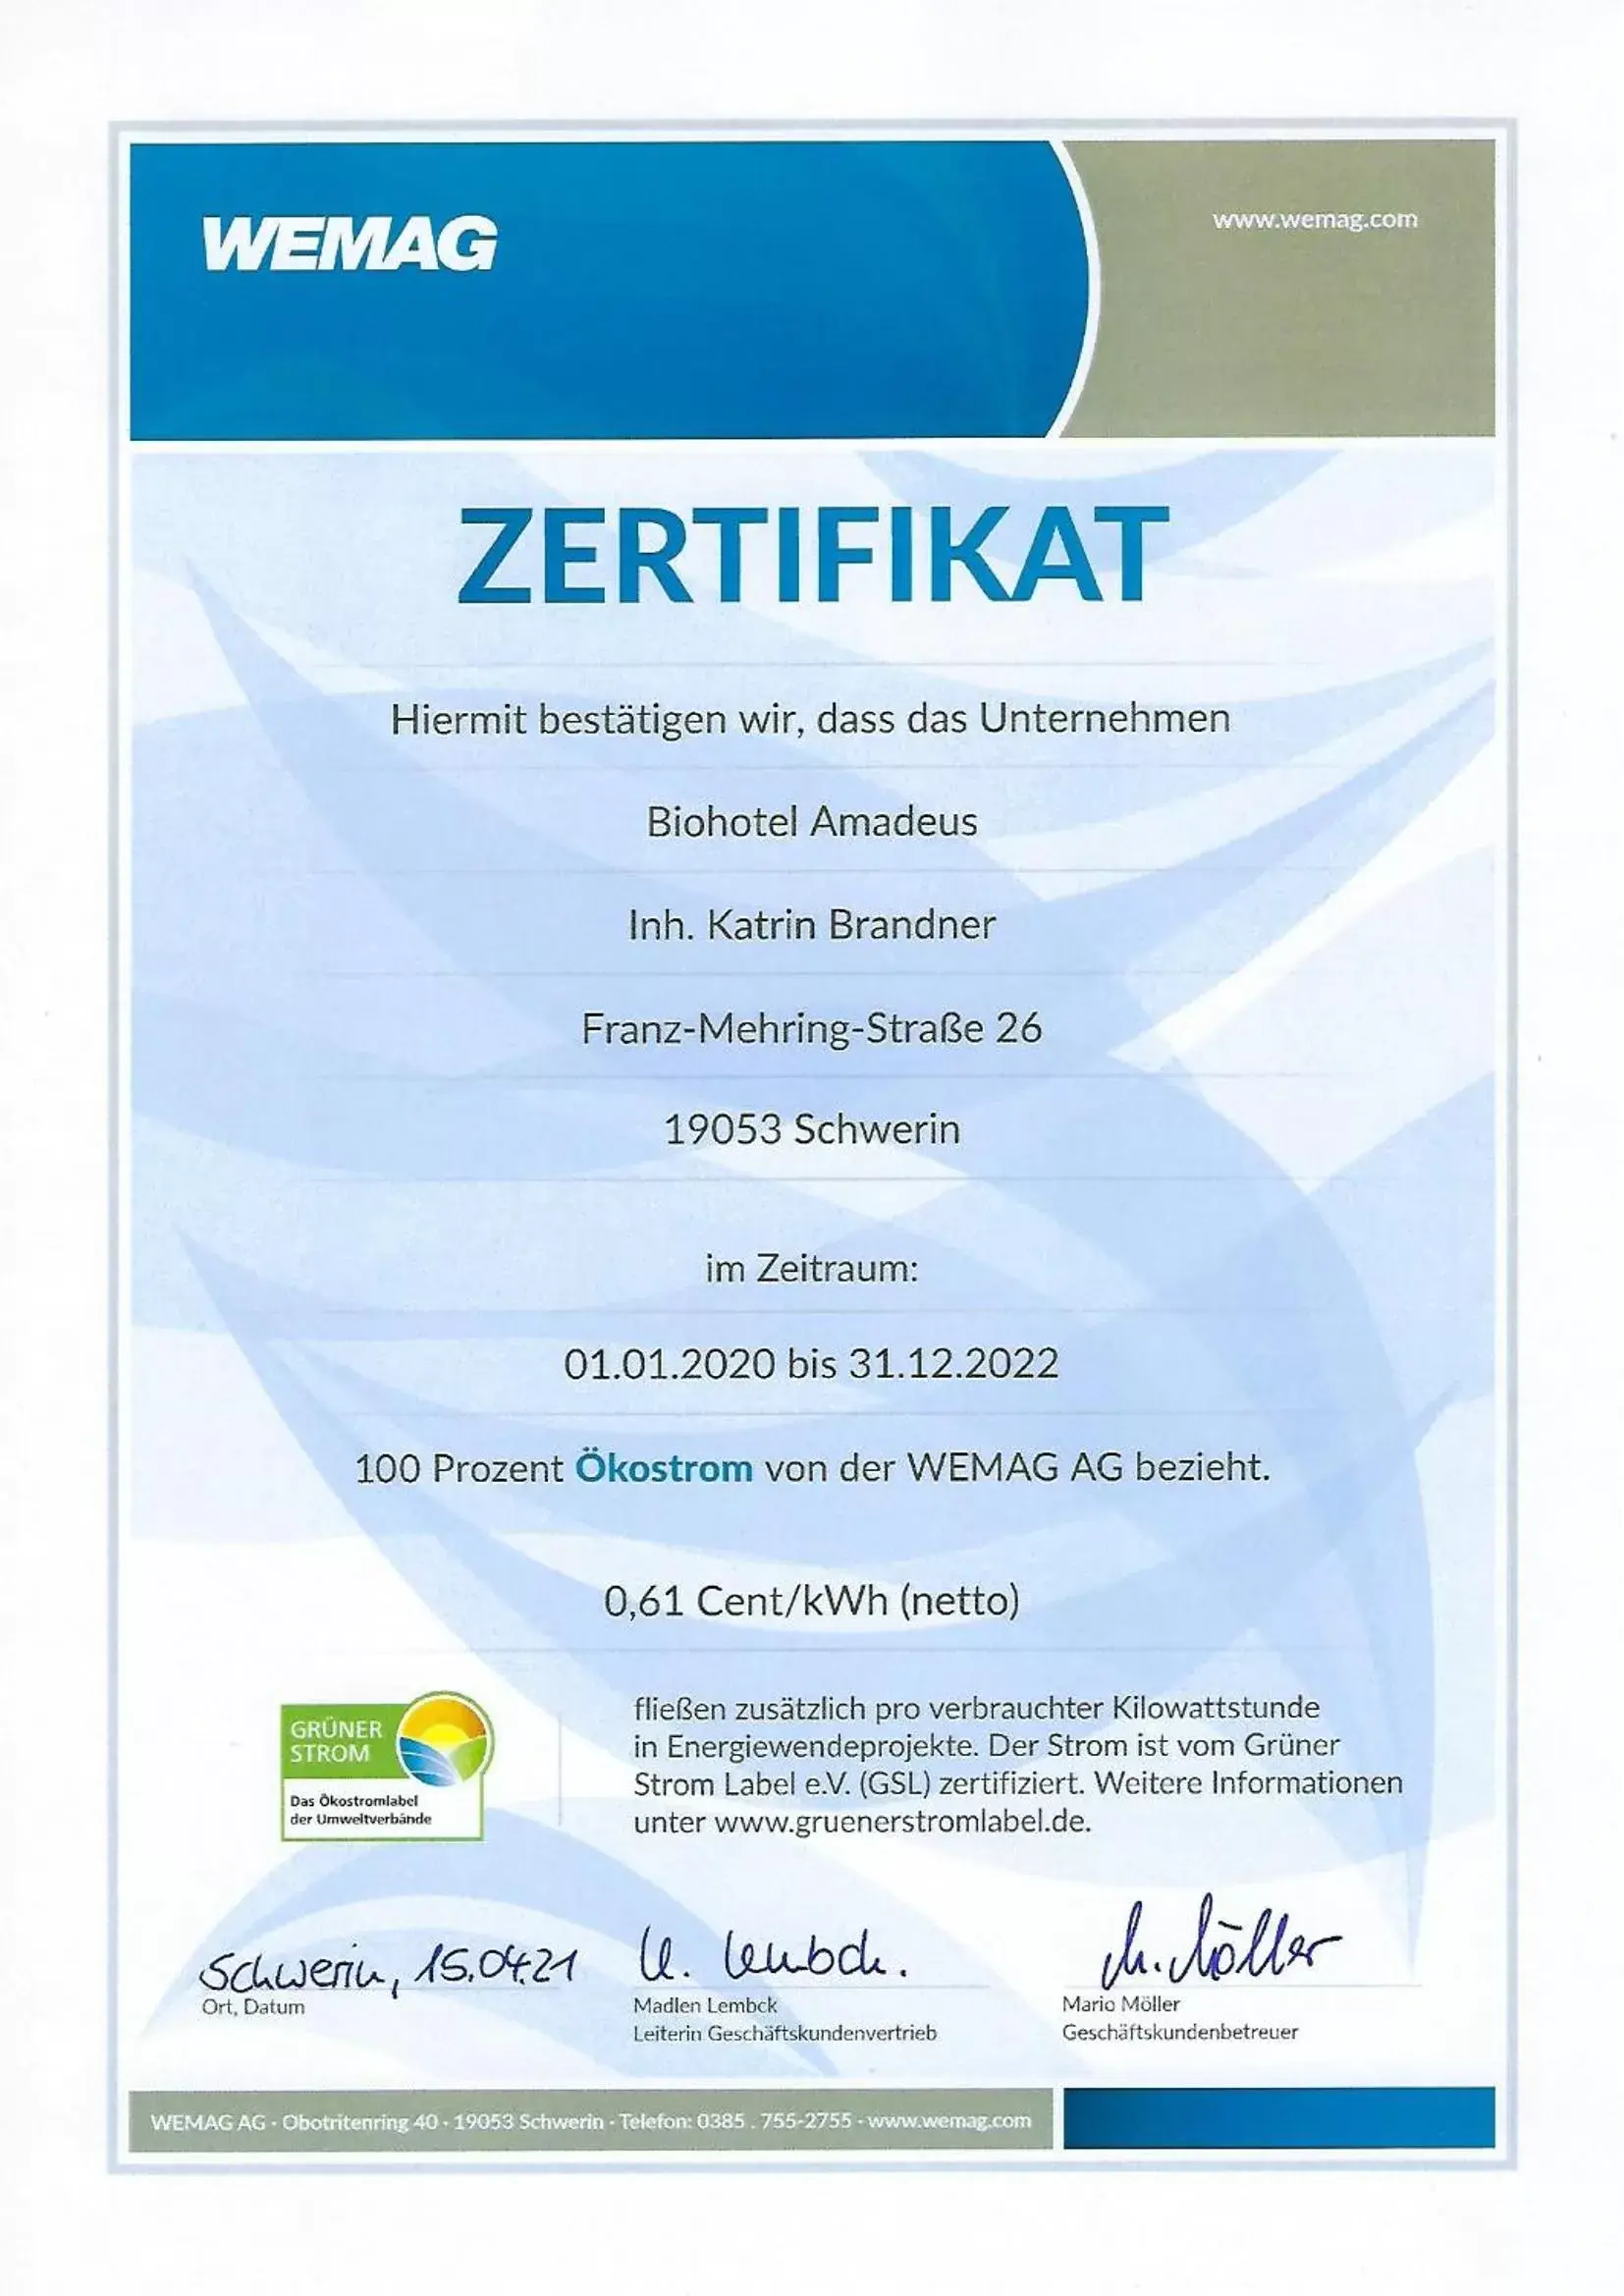 Certificate/Award in Biohotel Amadeus